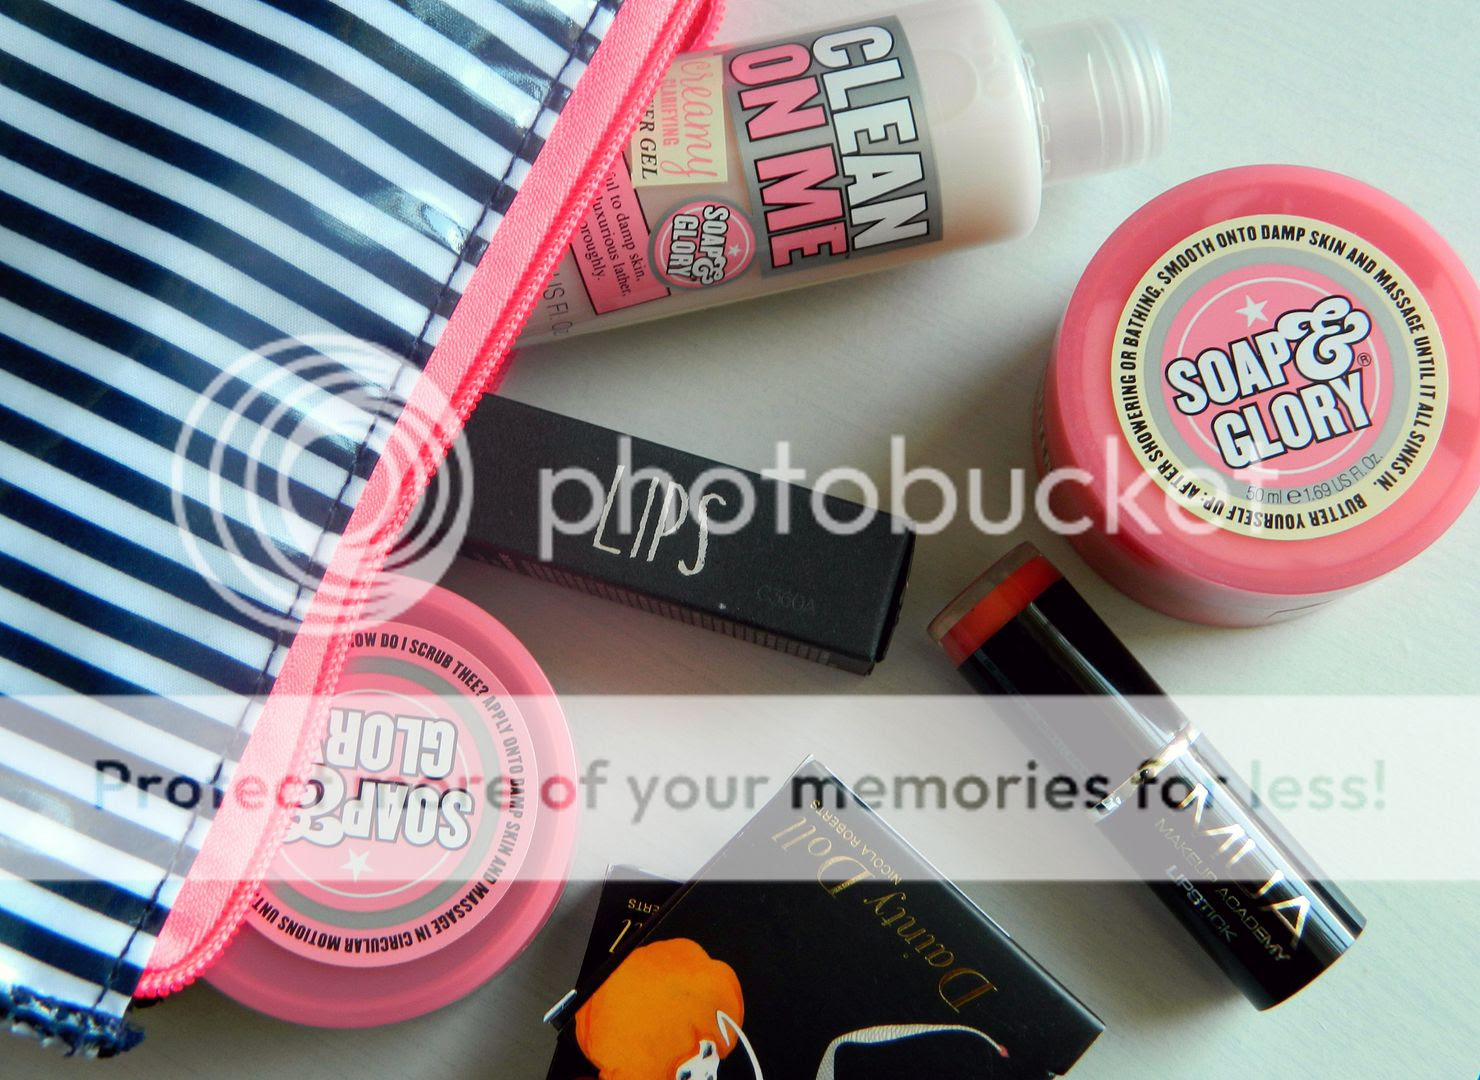 1000 Followers Giveaway Prizes Topshop Lipstick Beauty Goodies Belle-amie UK Beauty Fashion Lifestyle Blog